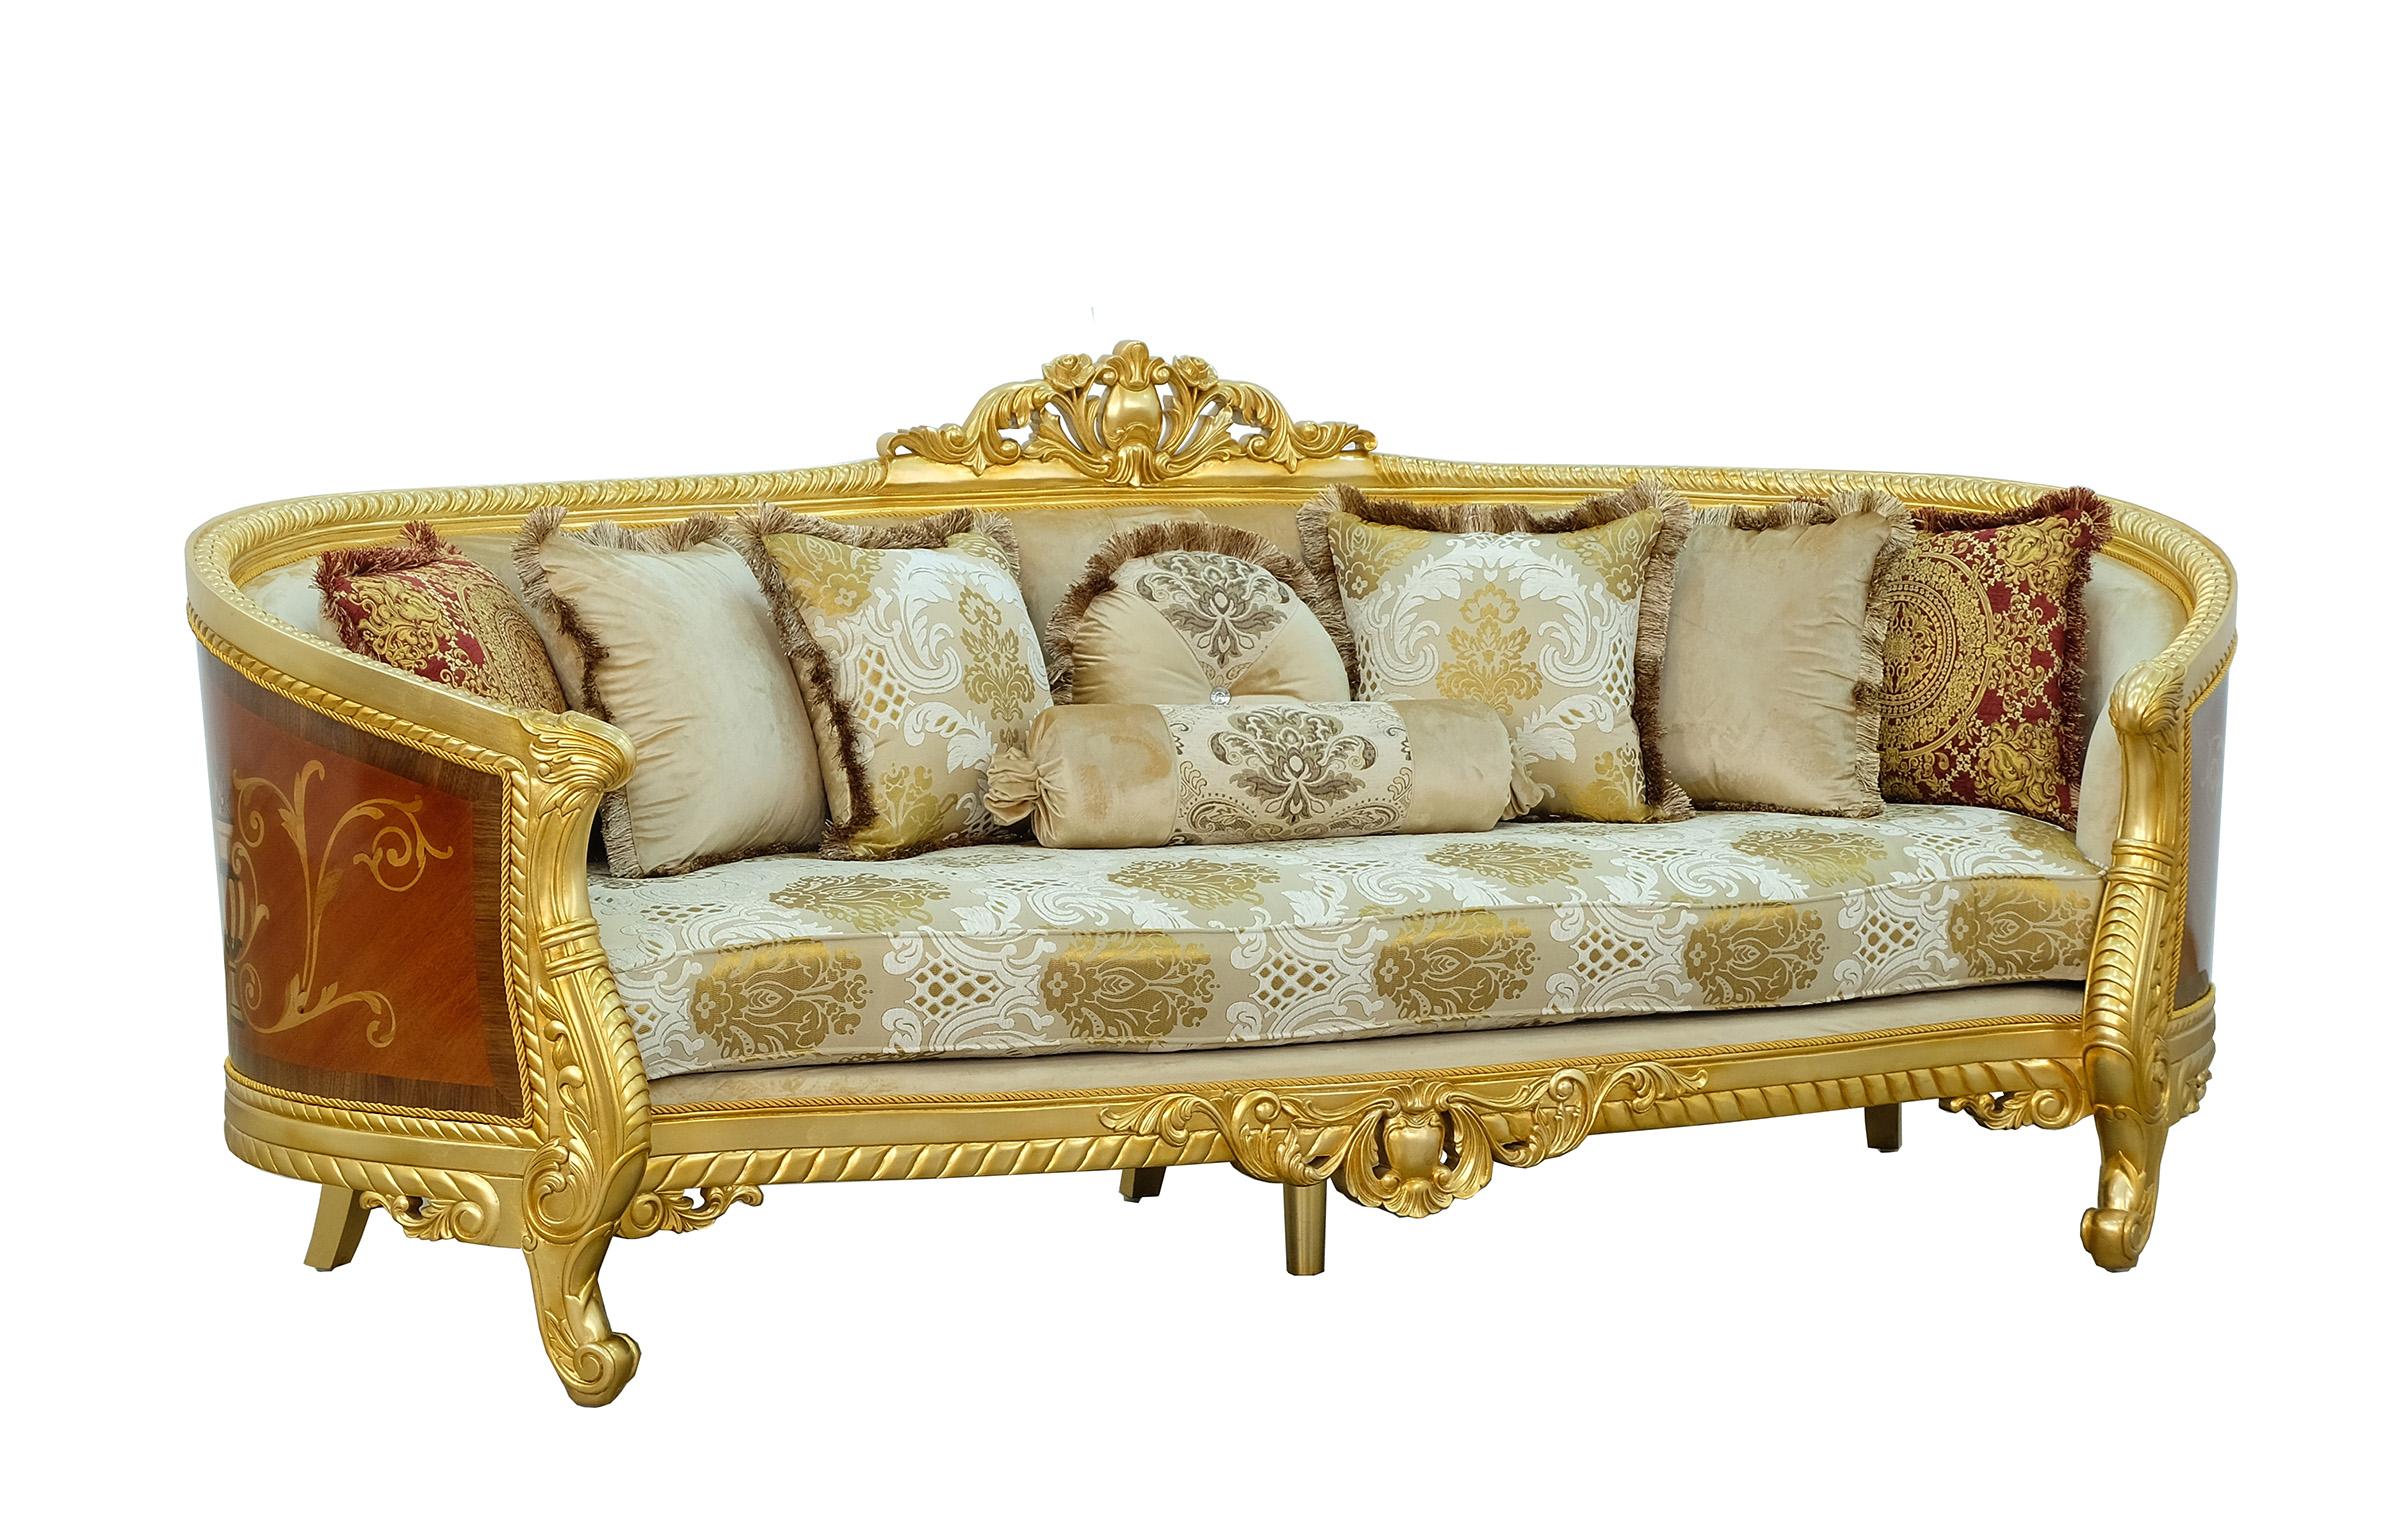 Classic, Traditional Sofa LUXOR 68584-S in Ebony, Antique, Mahogany, Gold, Beige Fabric